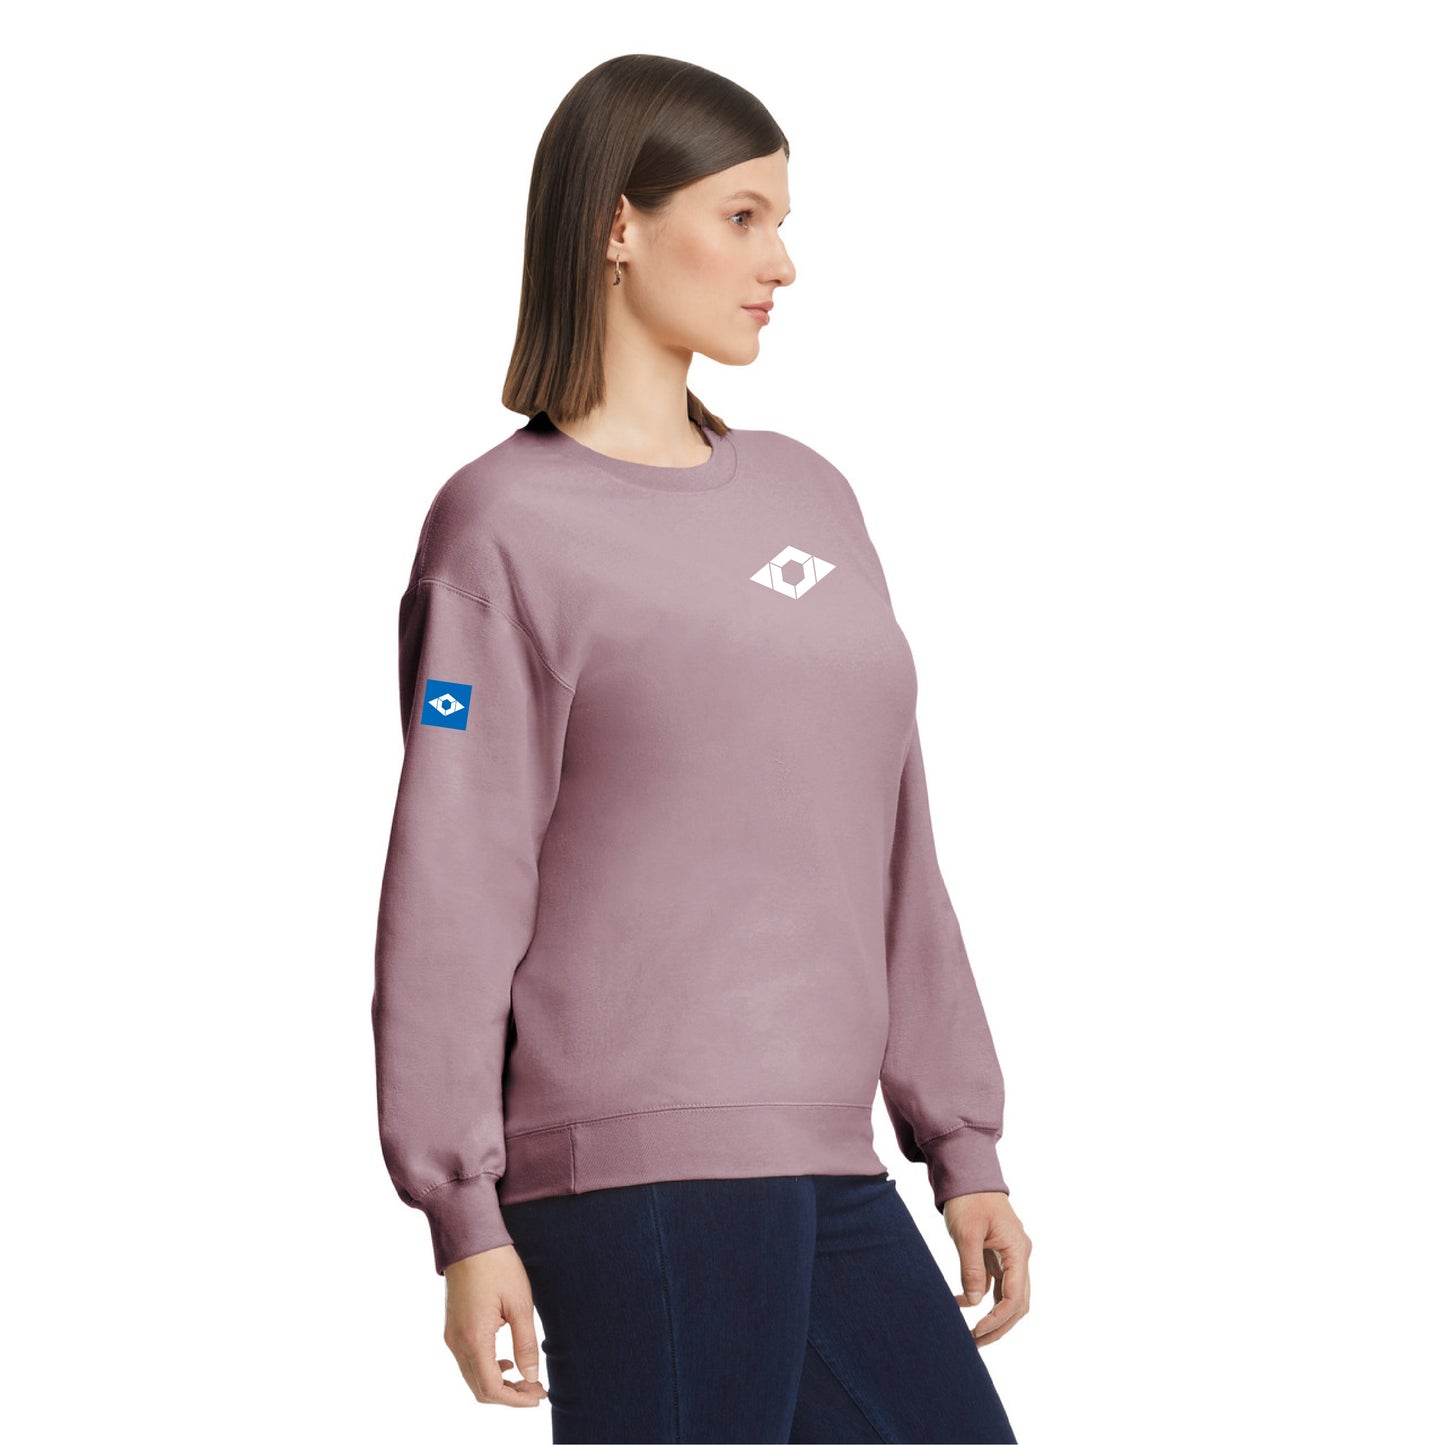 Union of Forces® Identitäts-Sweatshirt